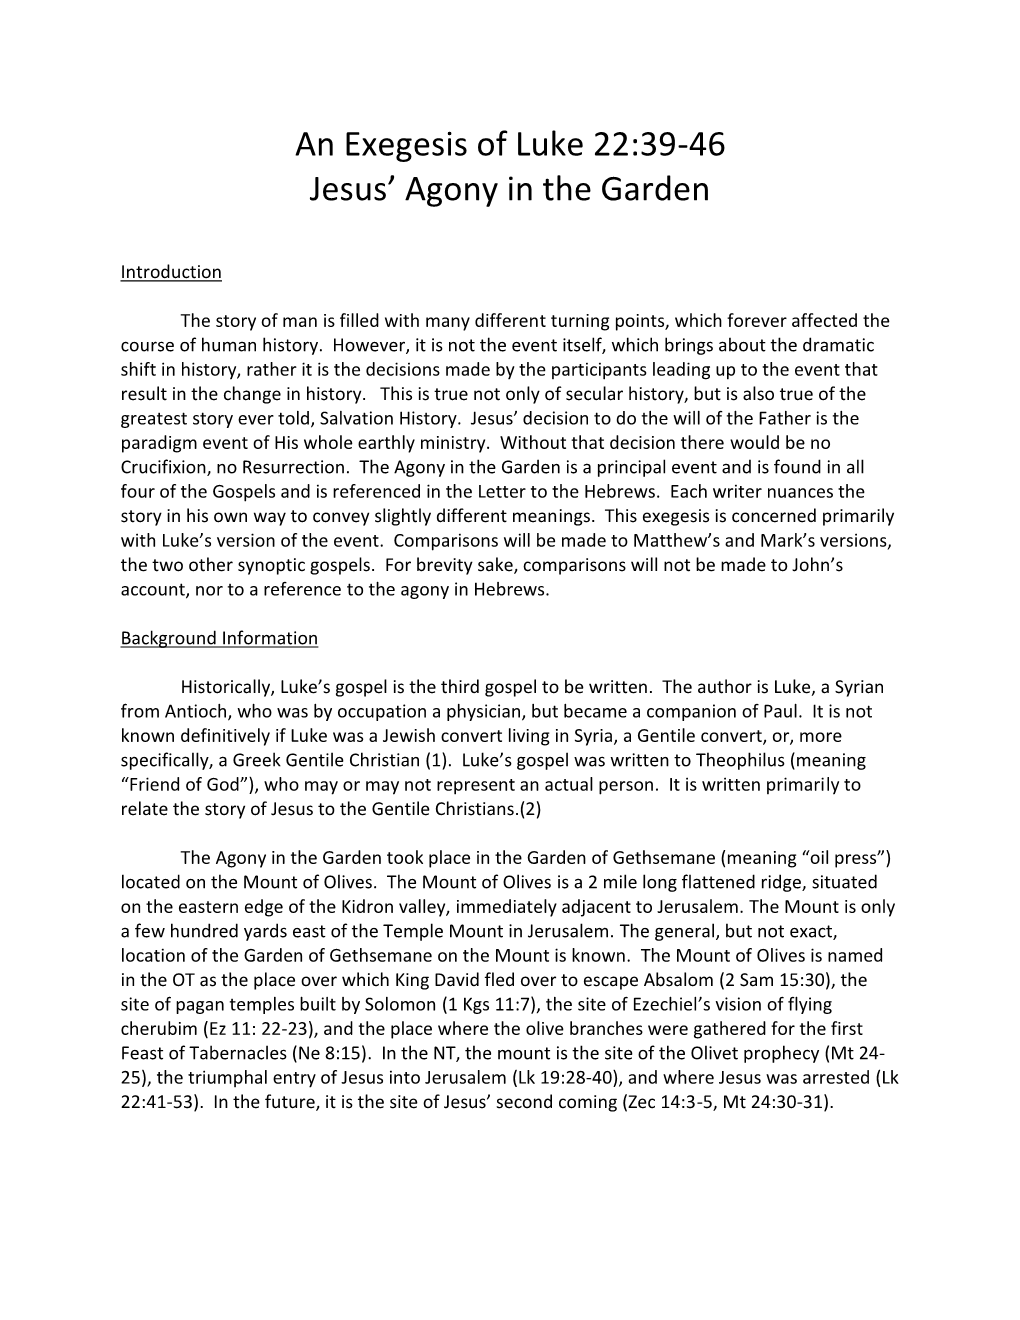 An Exegesis of Luke 22:39-46 Jesus' Agony in the Garden